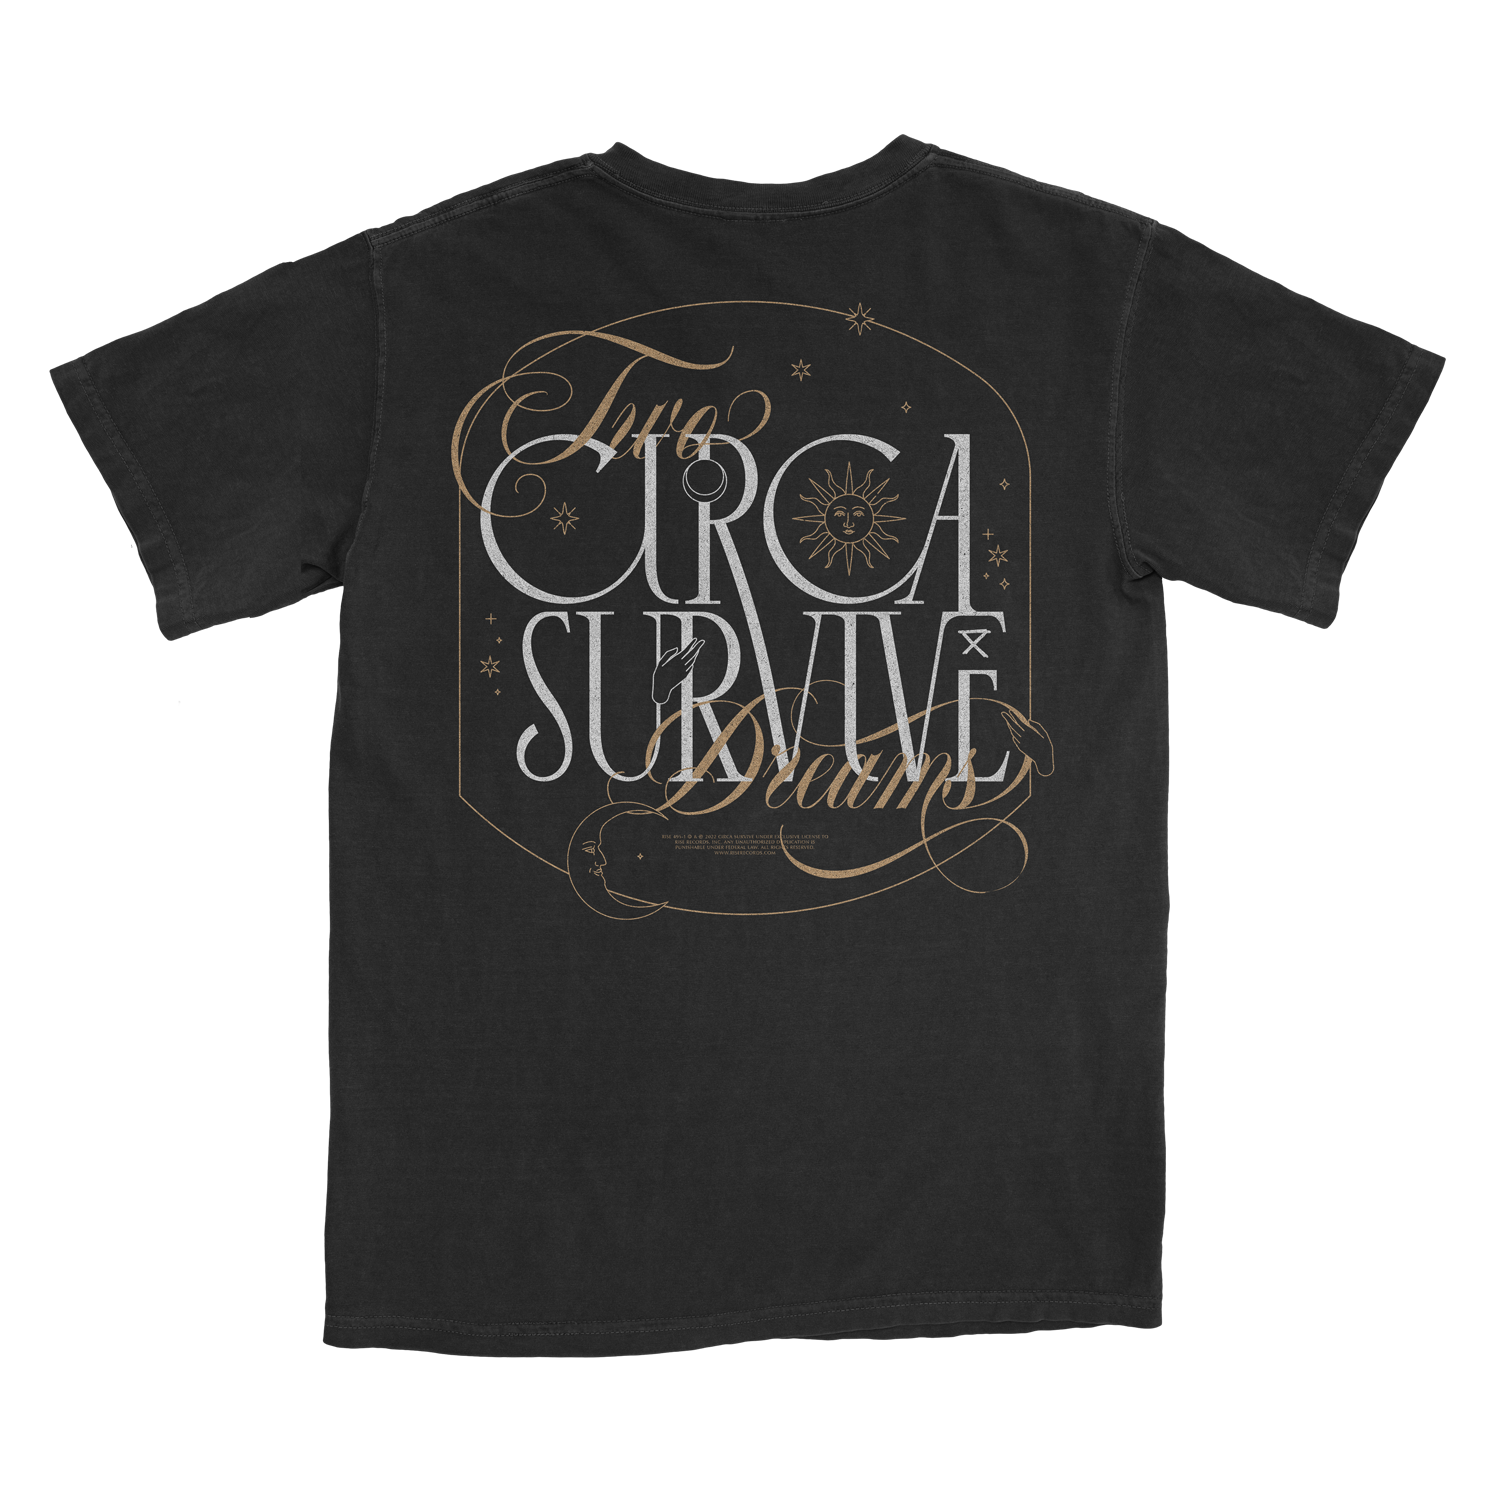 Survive – Circa Shirt Two Dreams